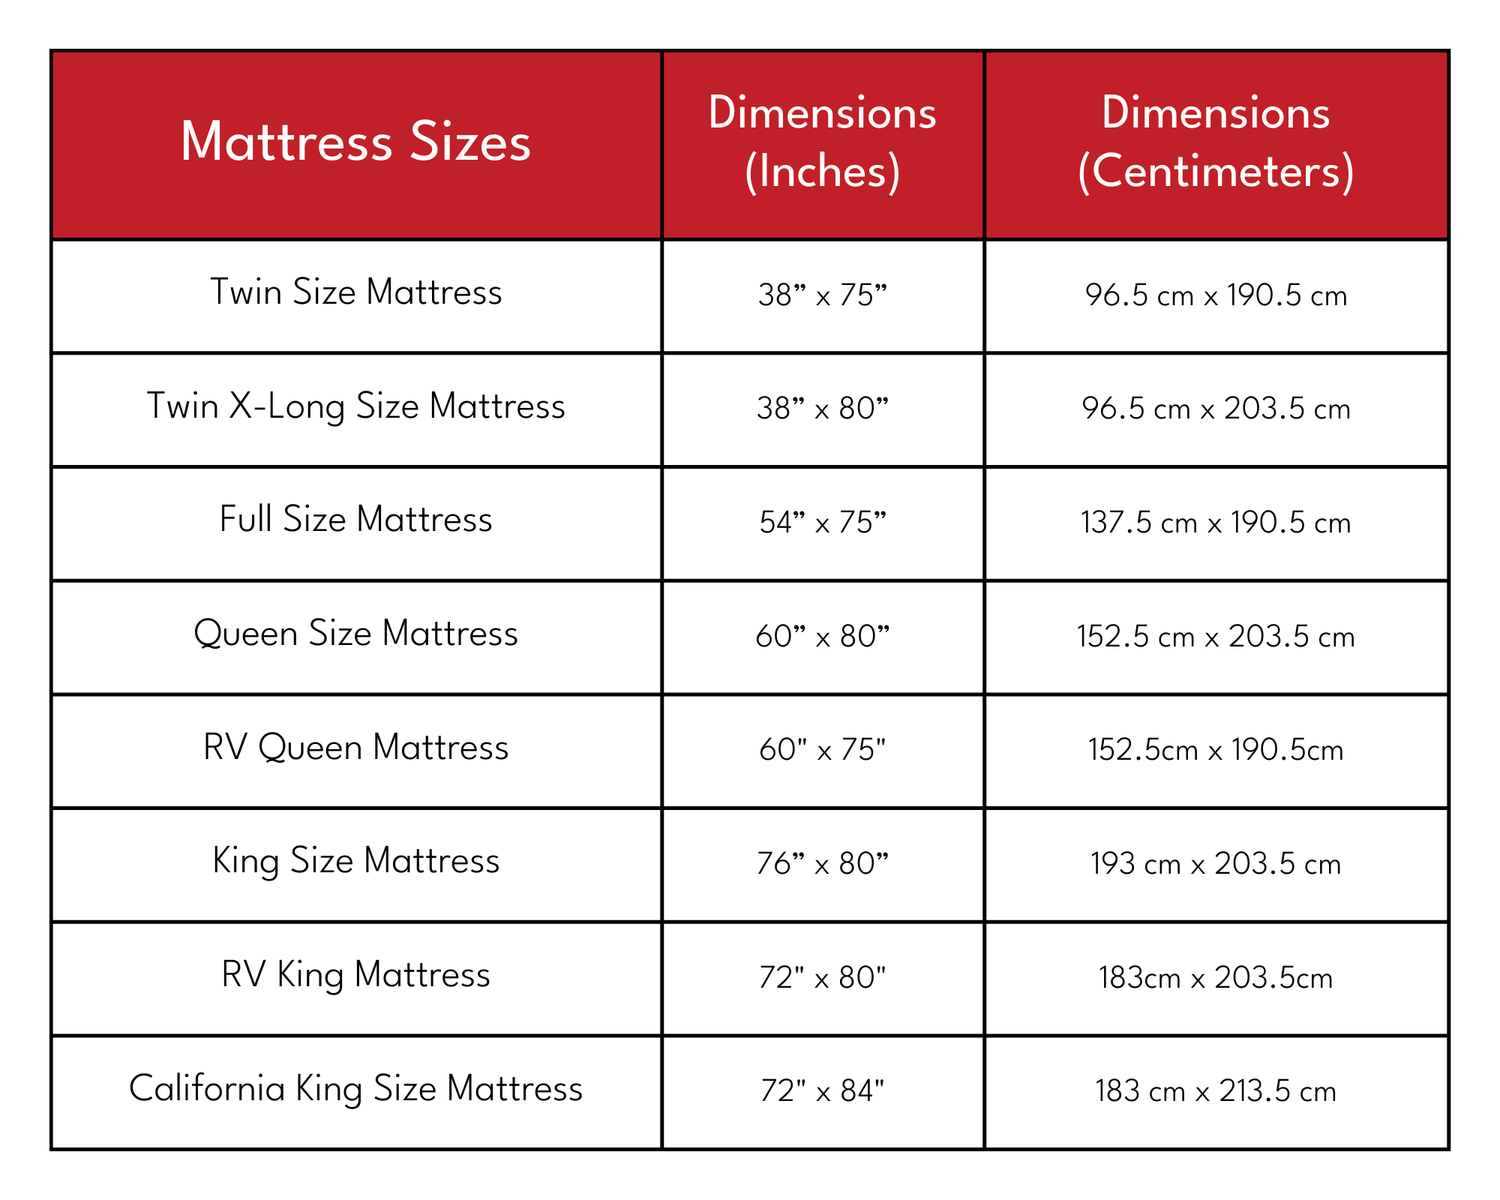 Choosing the Right Mattress Size